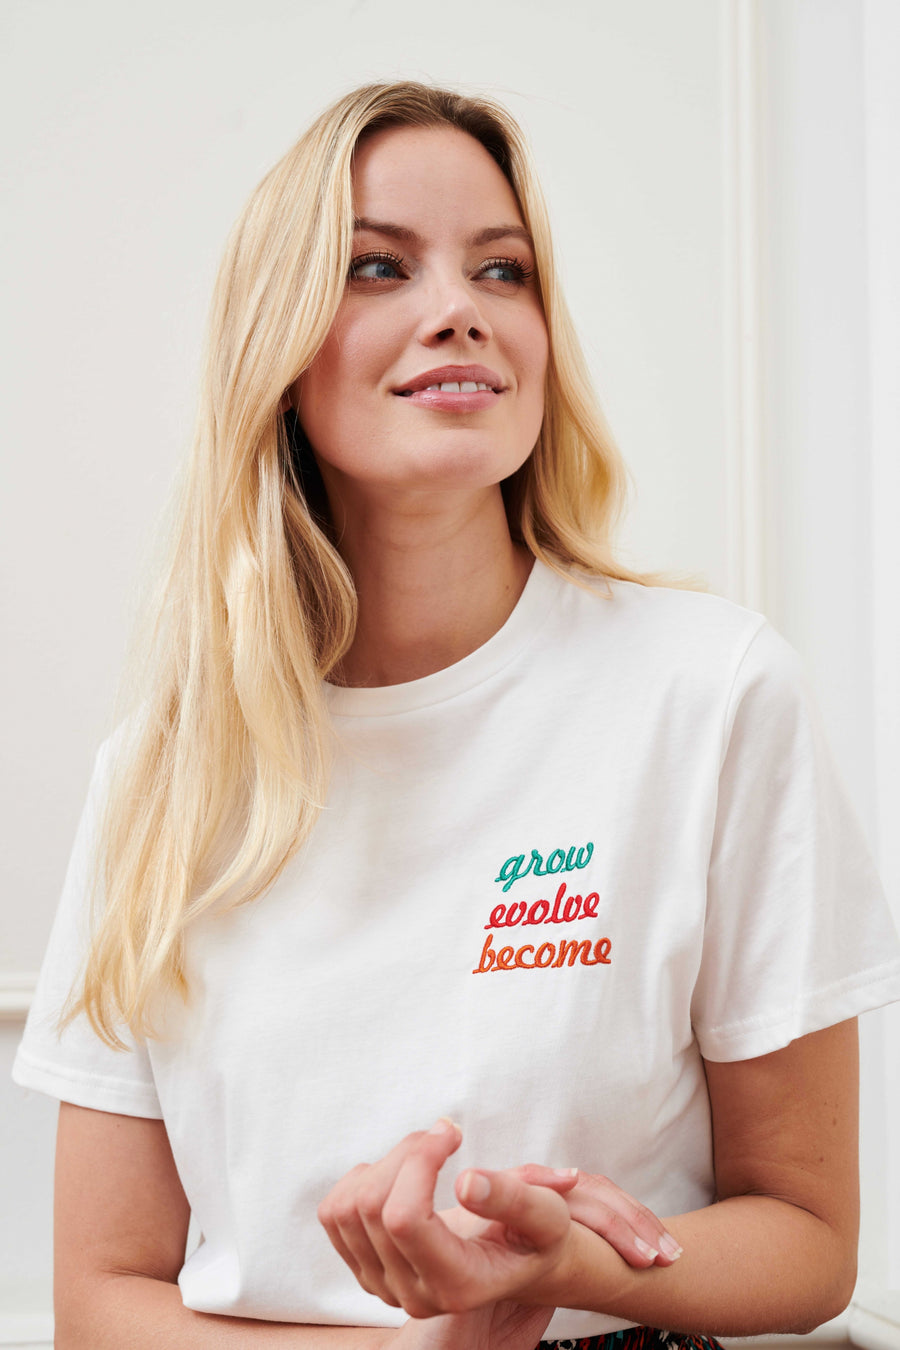 T-shirt Sauge | Blanc